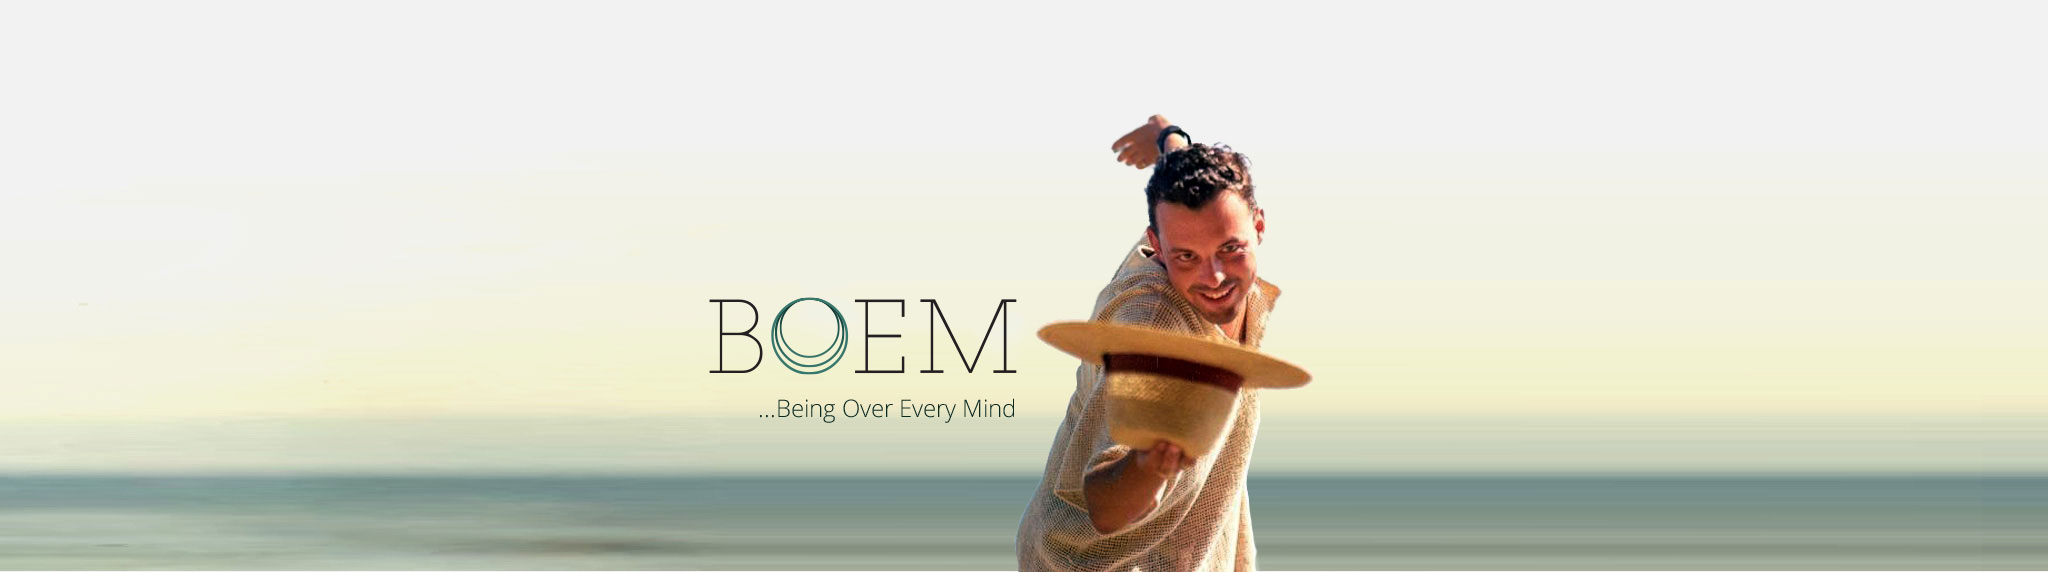 Boem Webradio - Being Over Every Mind